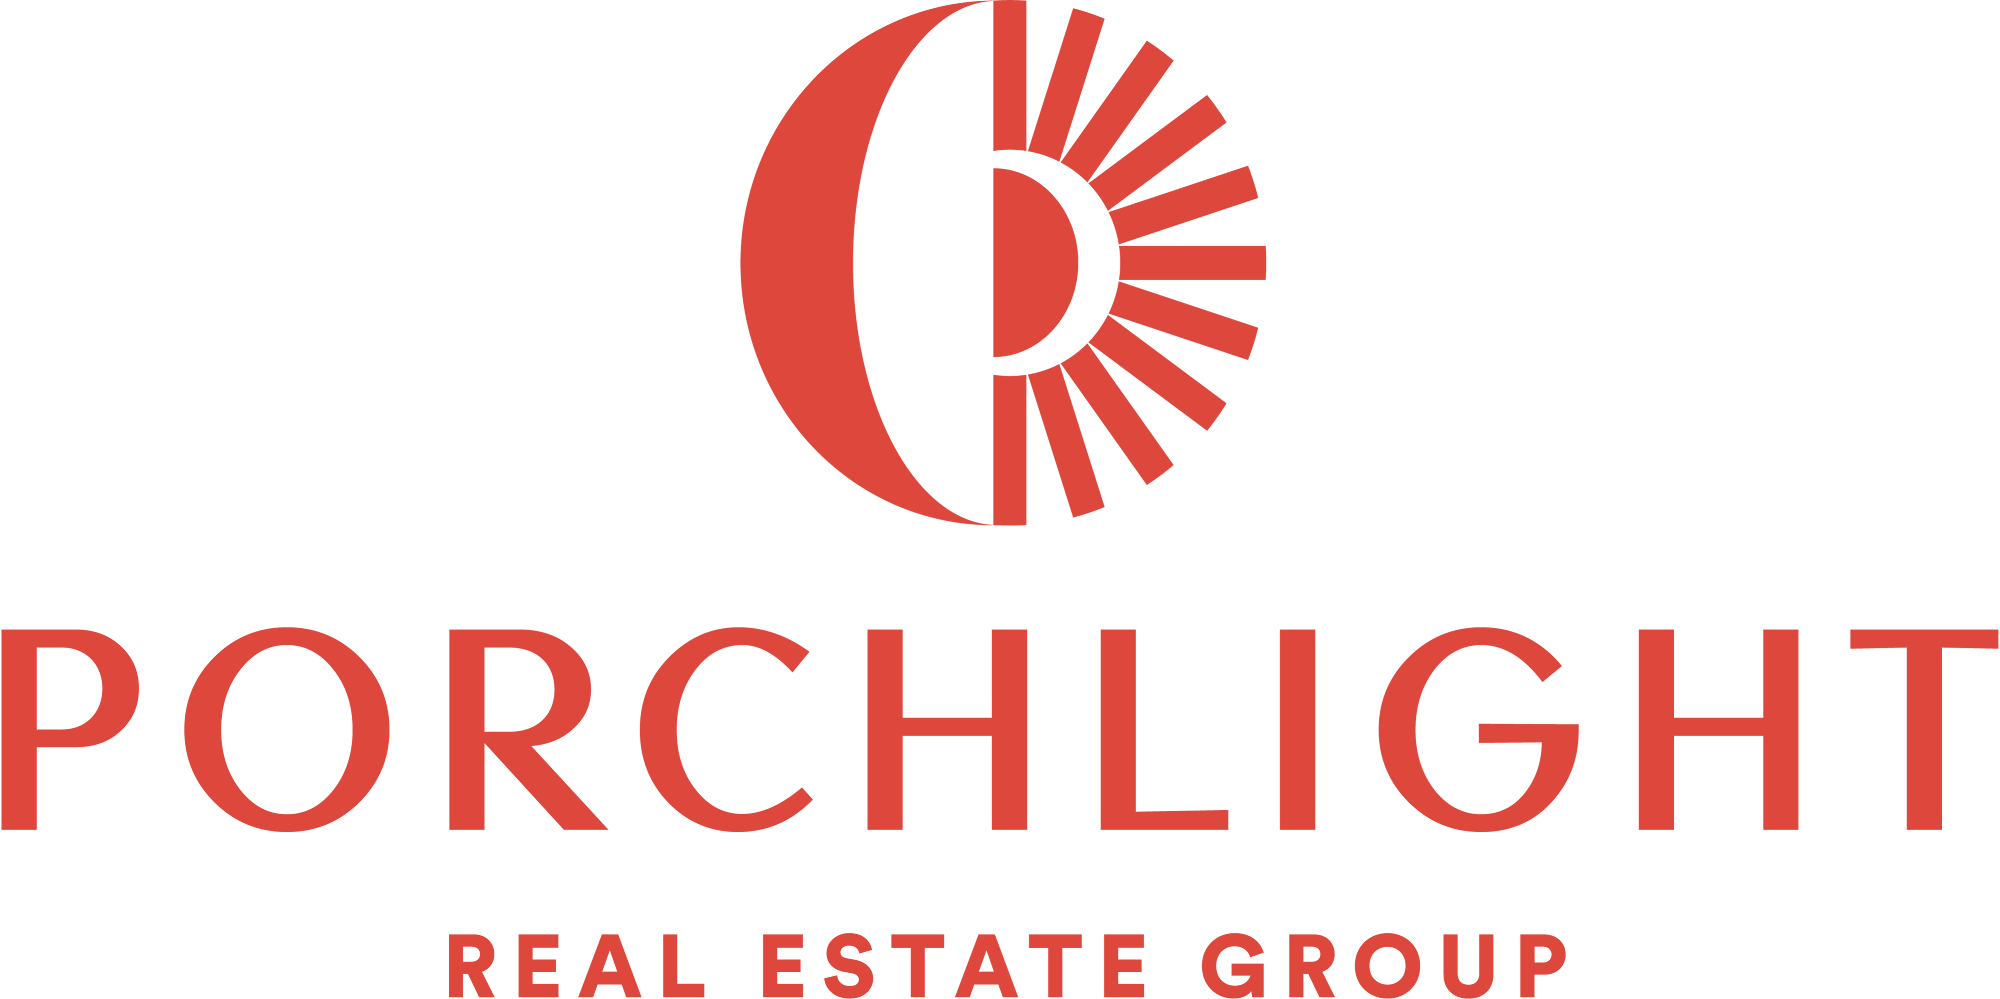 Kelly Kummer, Porchlight Real Estate Group